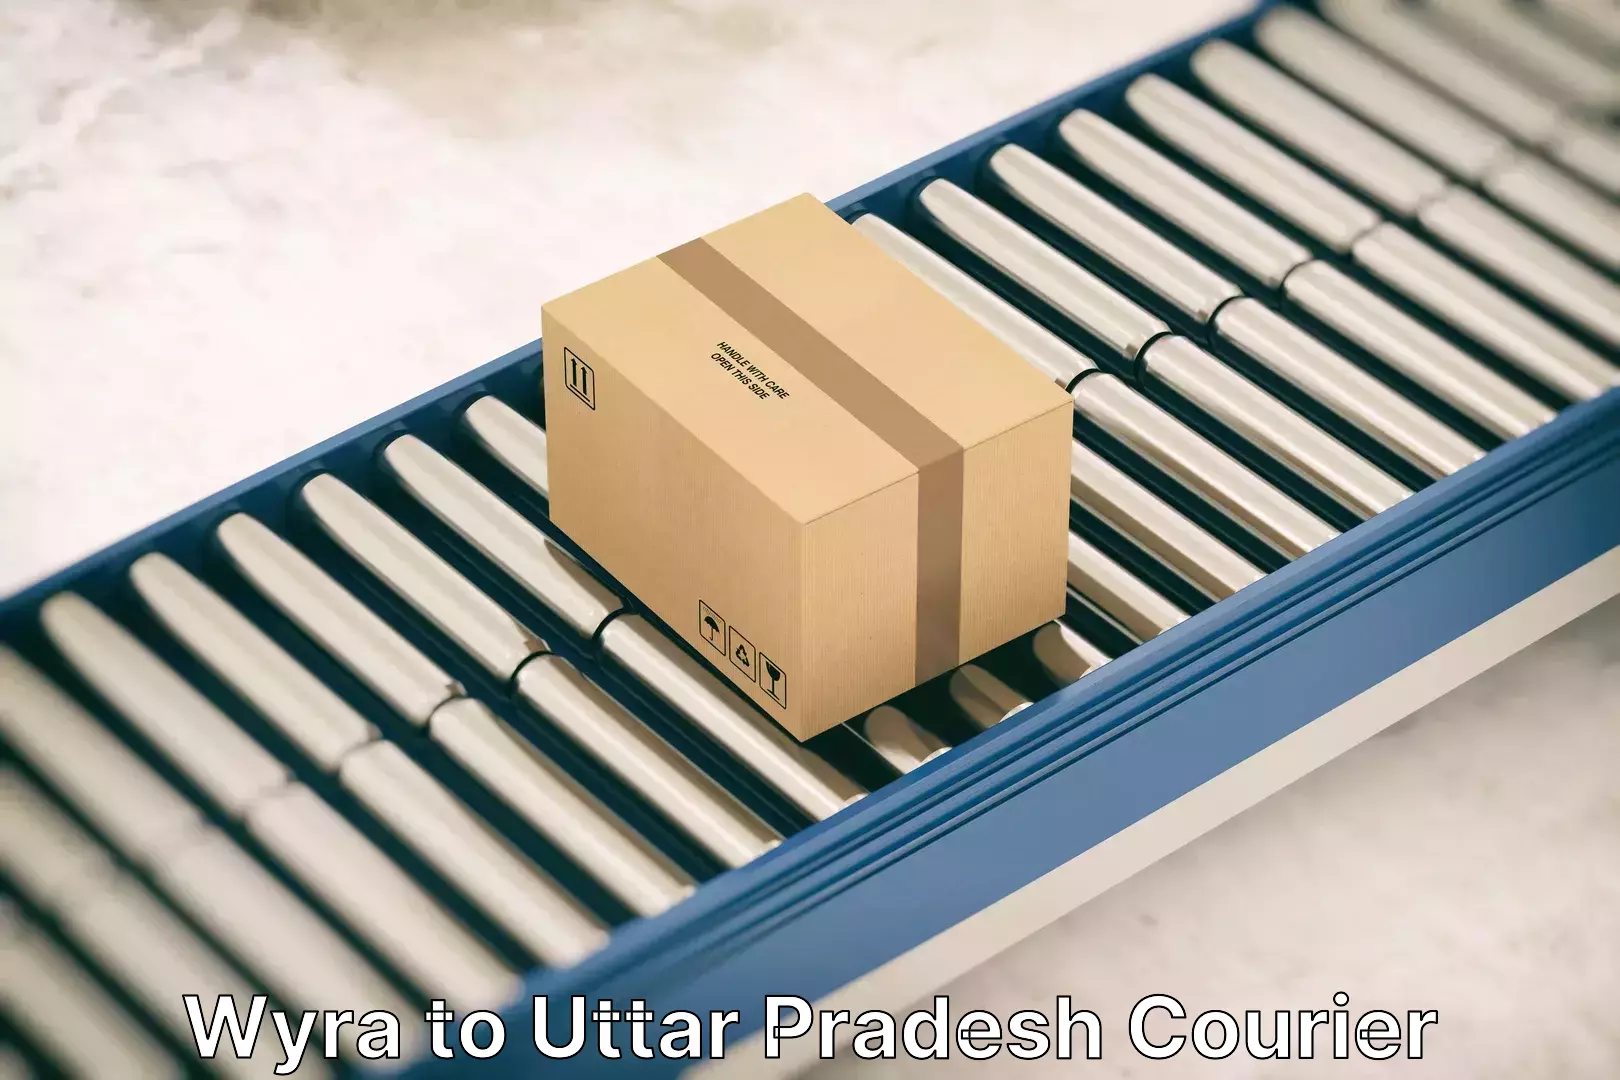 Trusted household movers Wyra to Uttar Pradesh